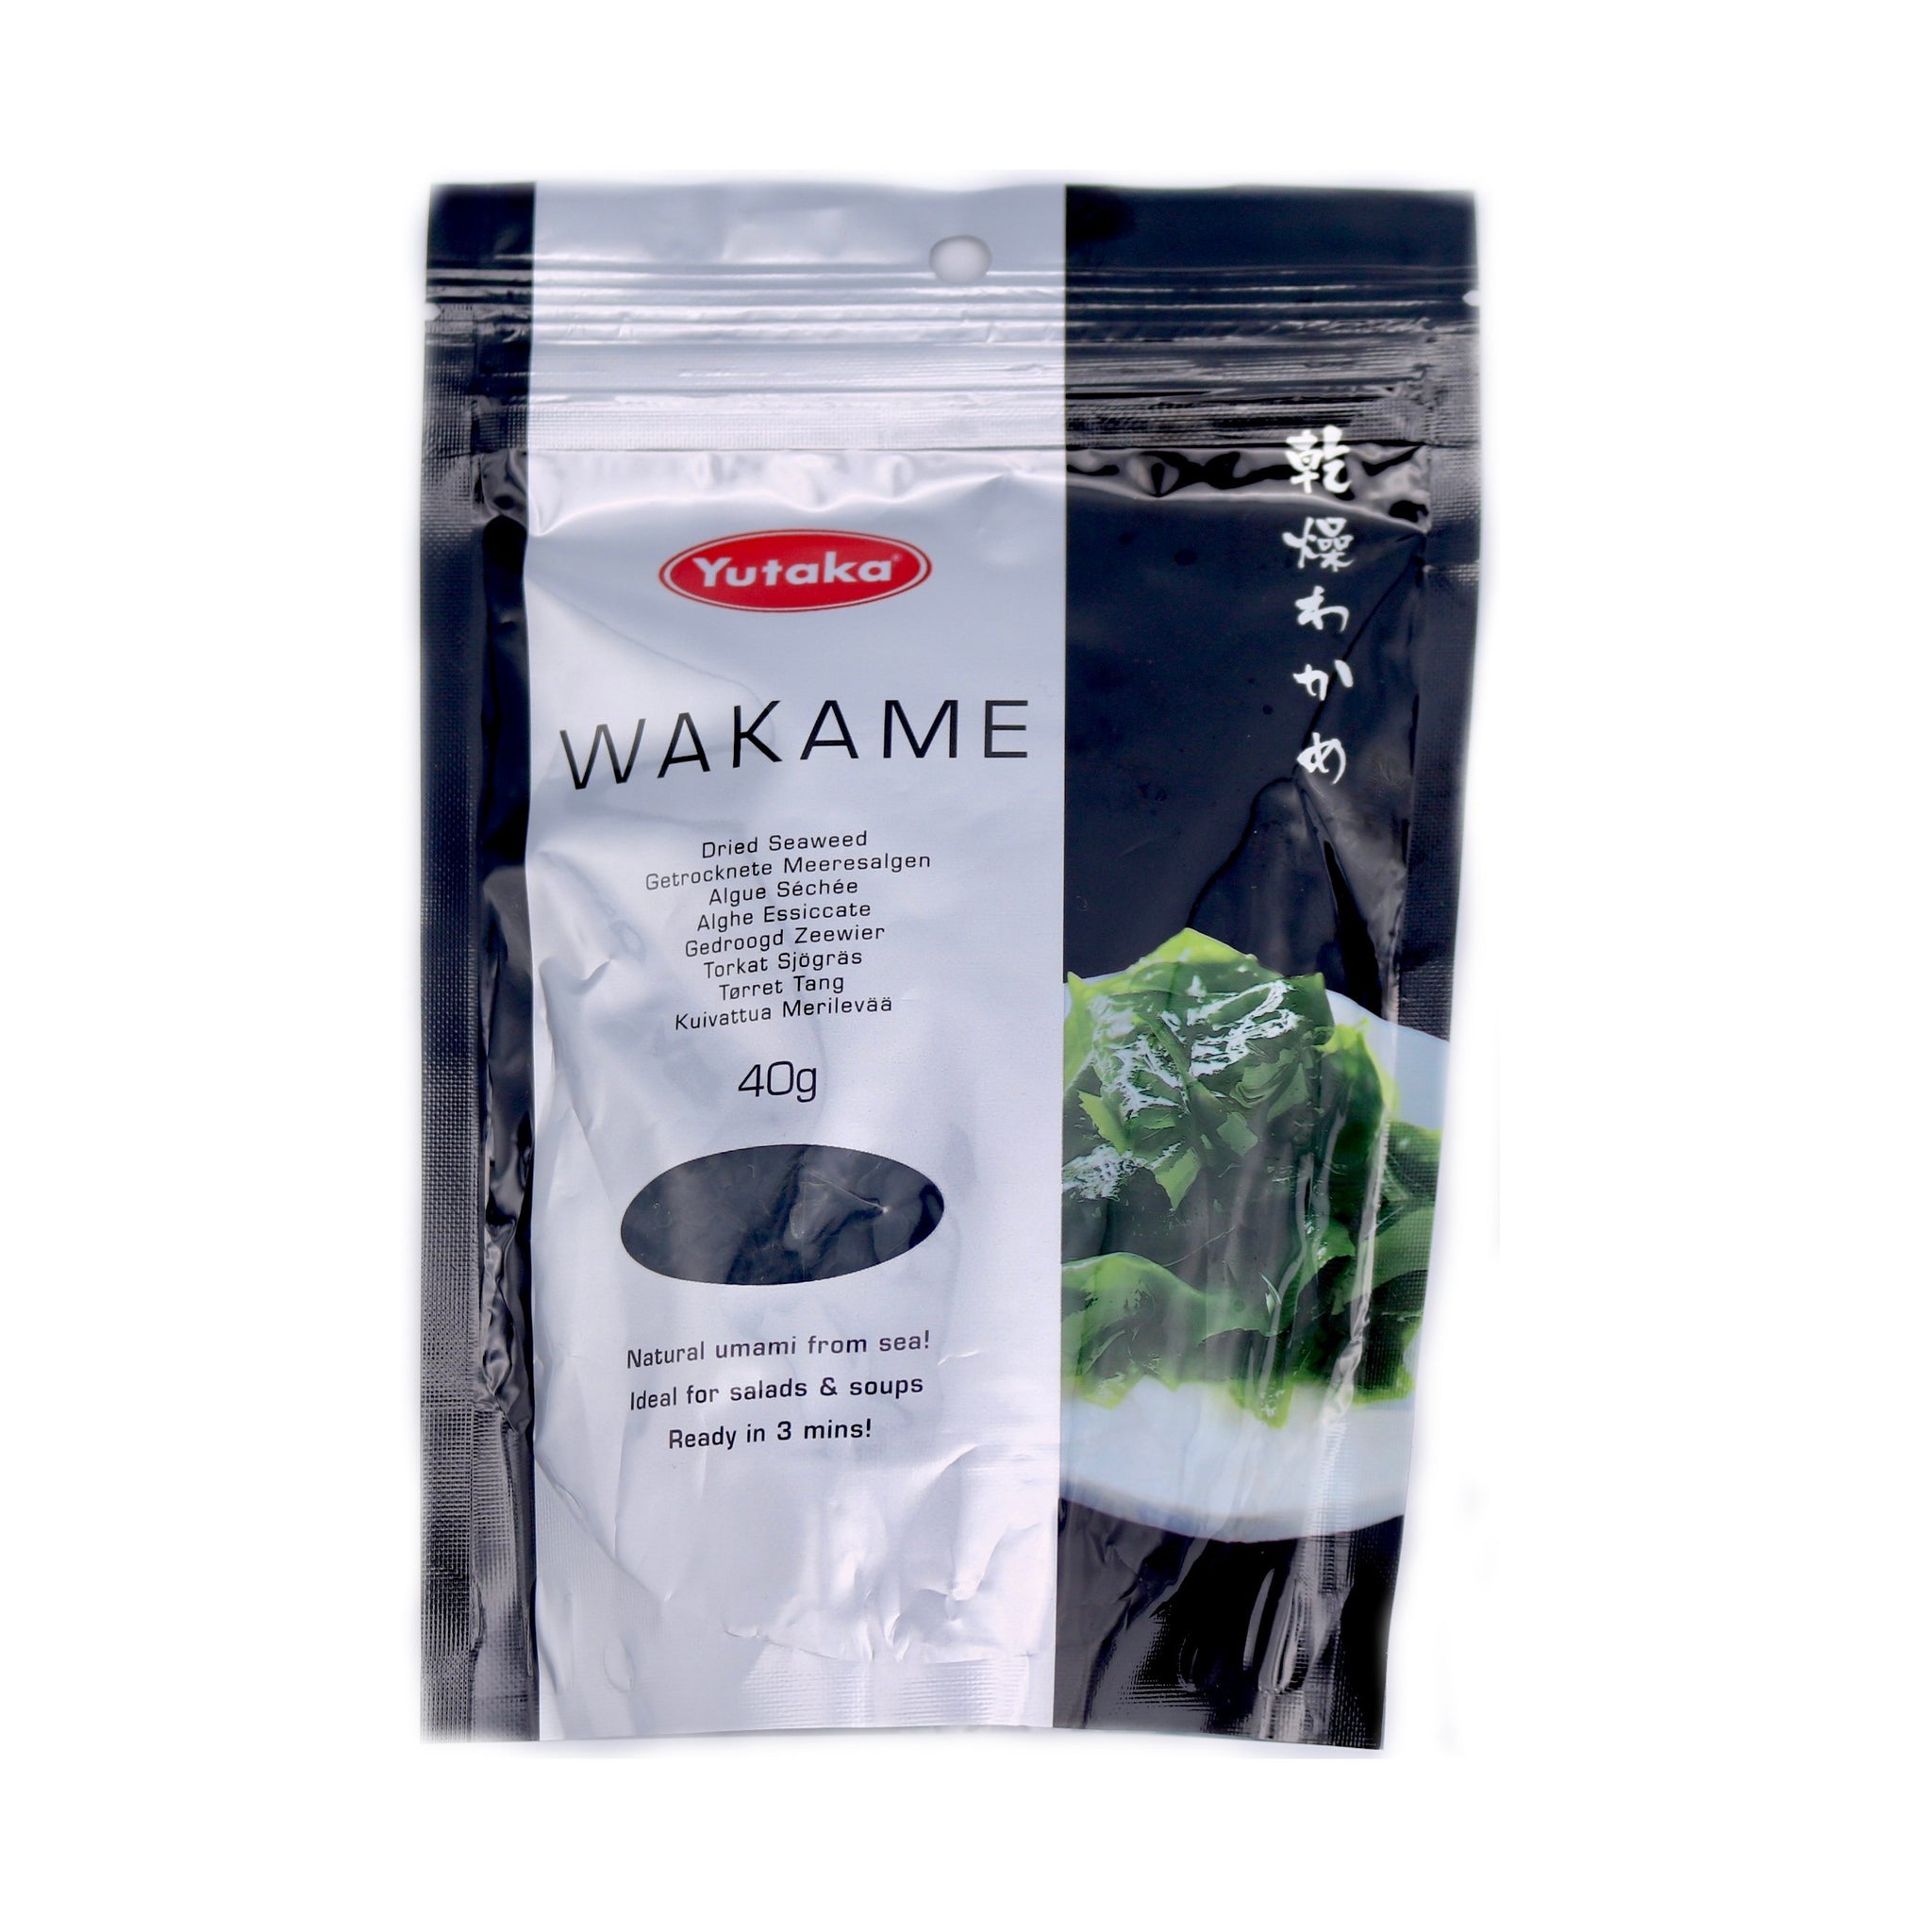 Algues sechees Fueru Wakame